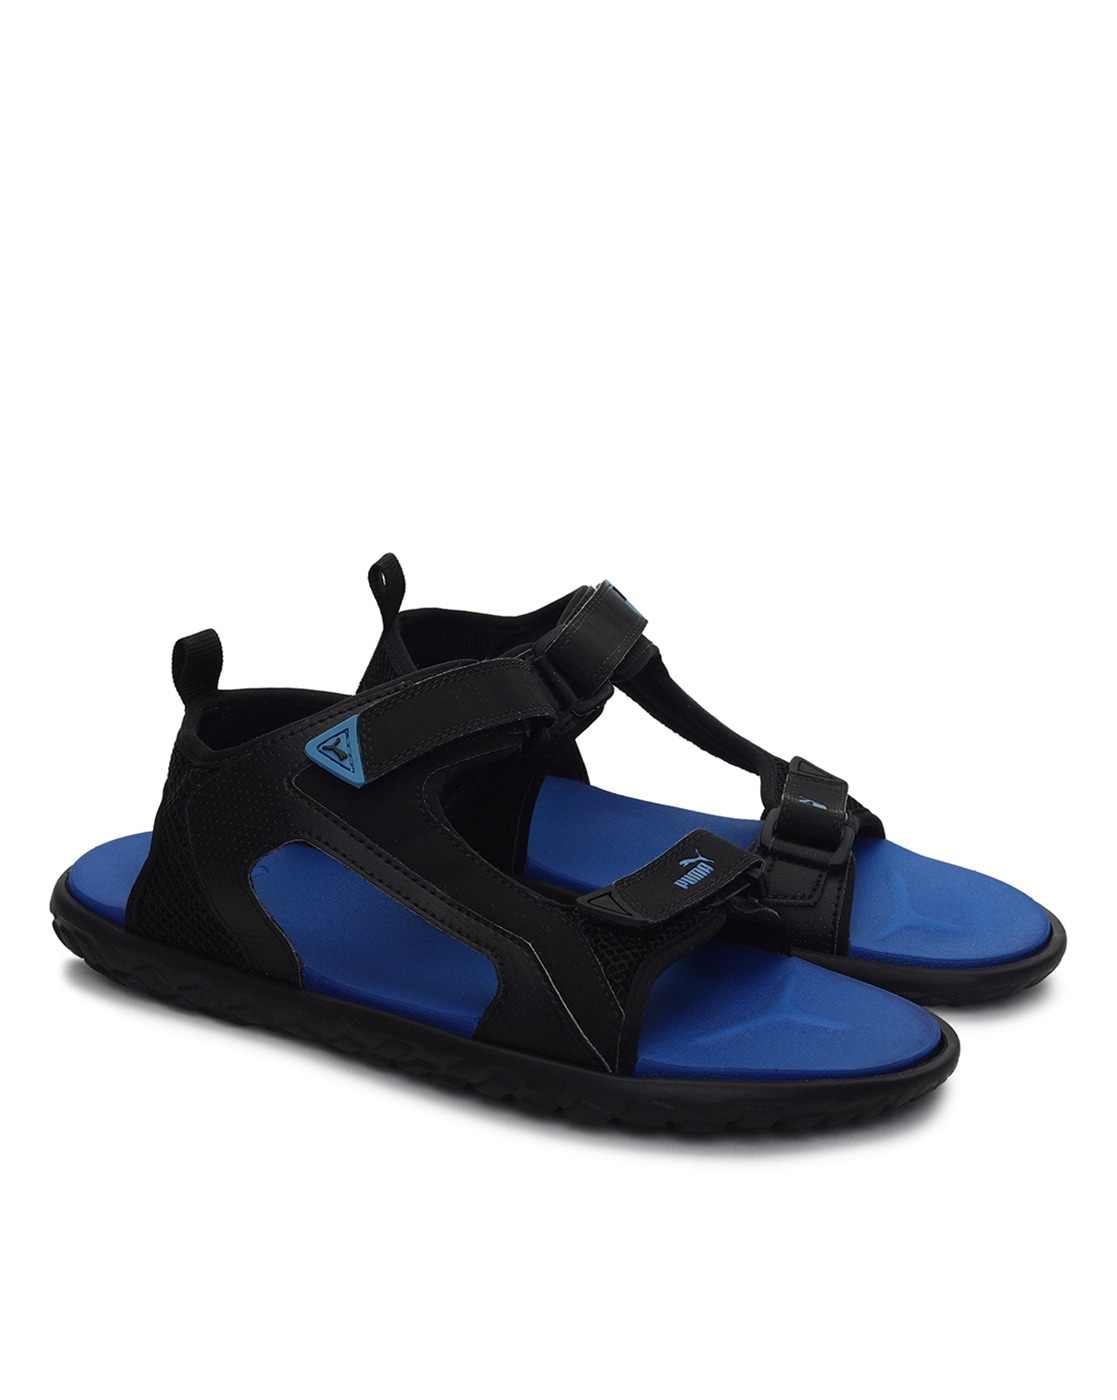 Clarks BREEZE PIPER Navy Blue Sandals - Family Footwear Center